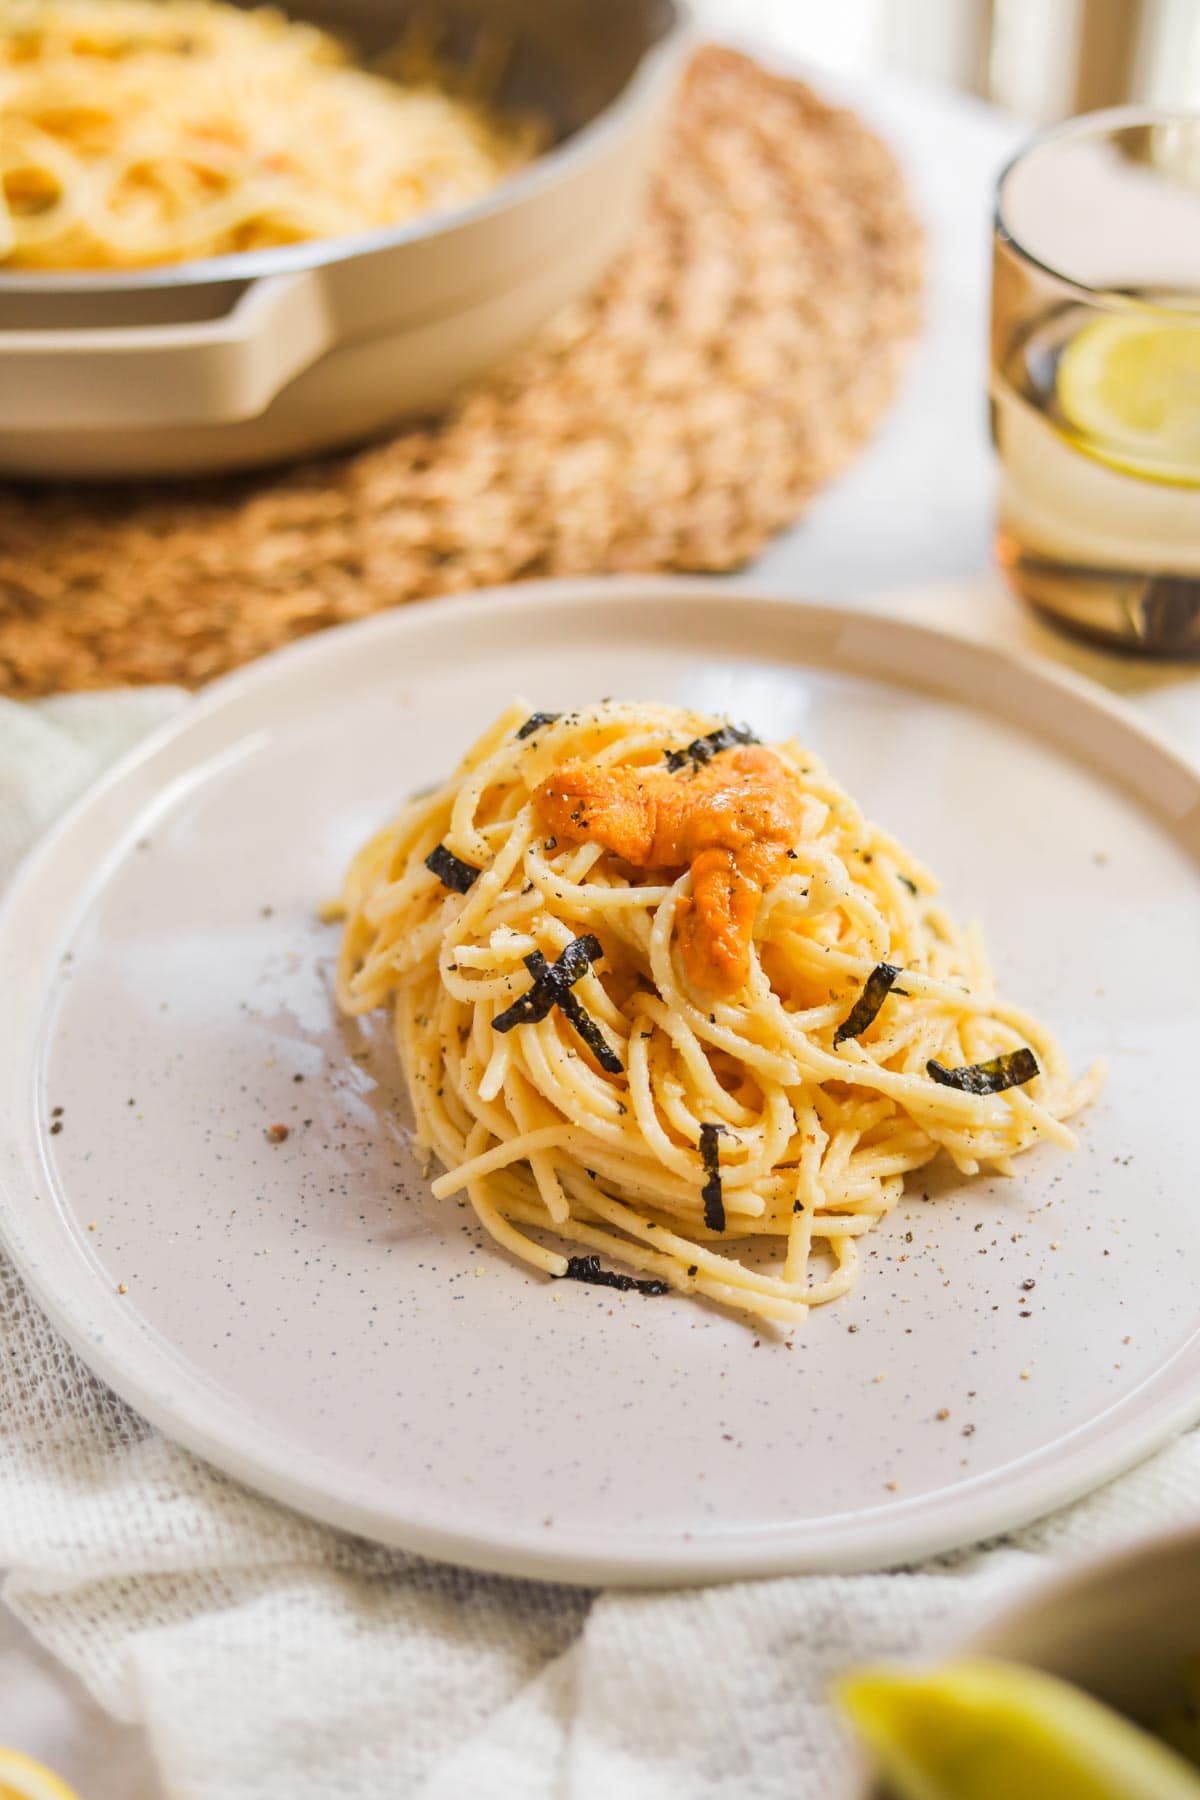 Uni pasta cacio e pepe on a plate with nori and sea urchin